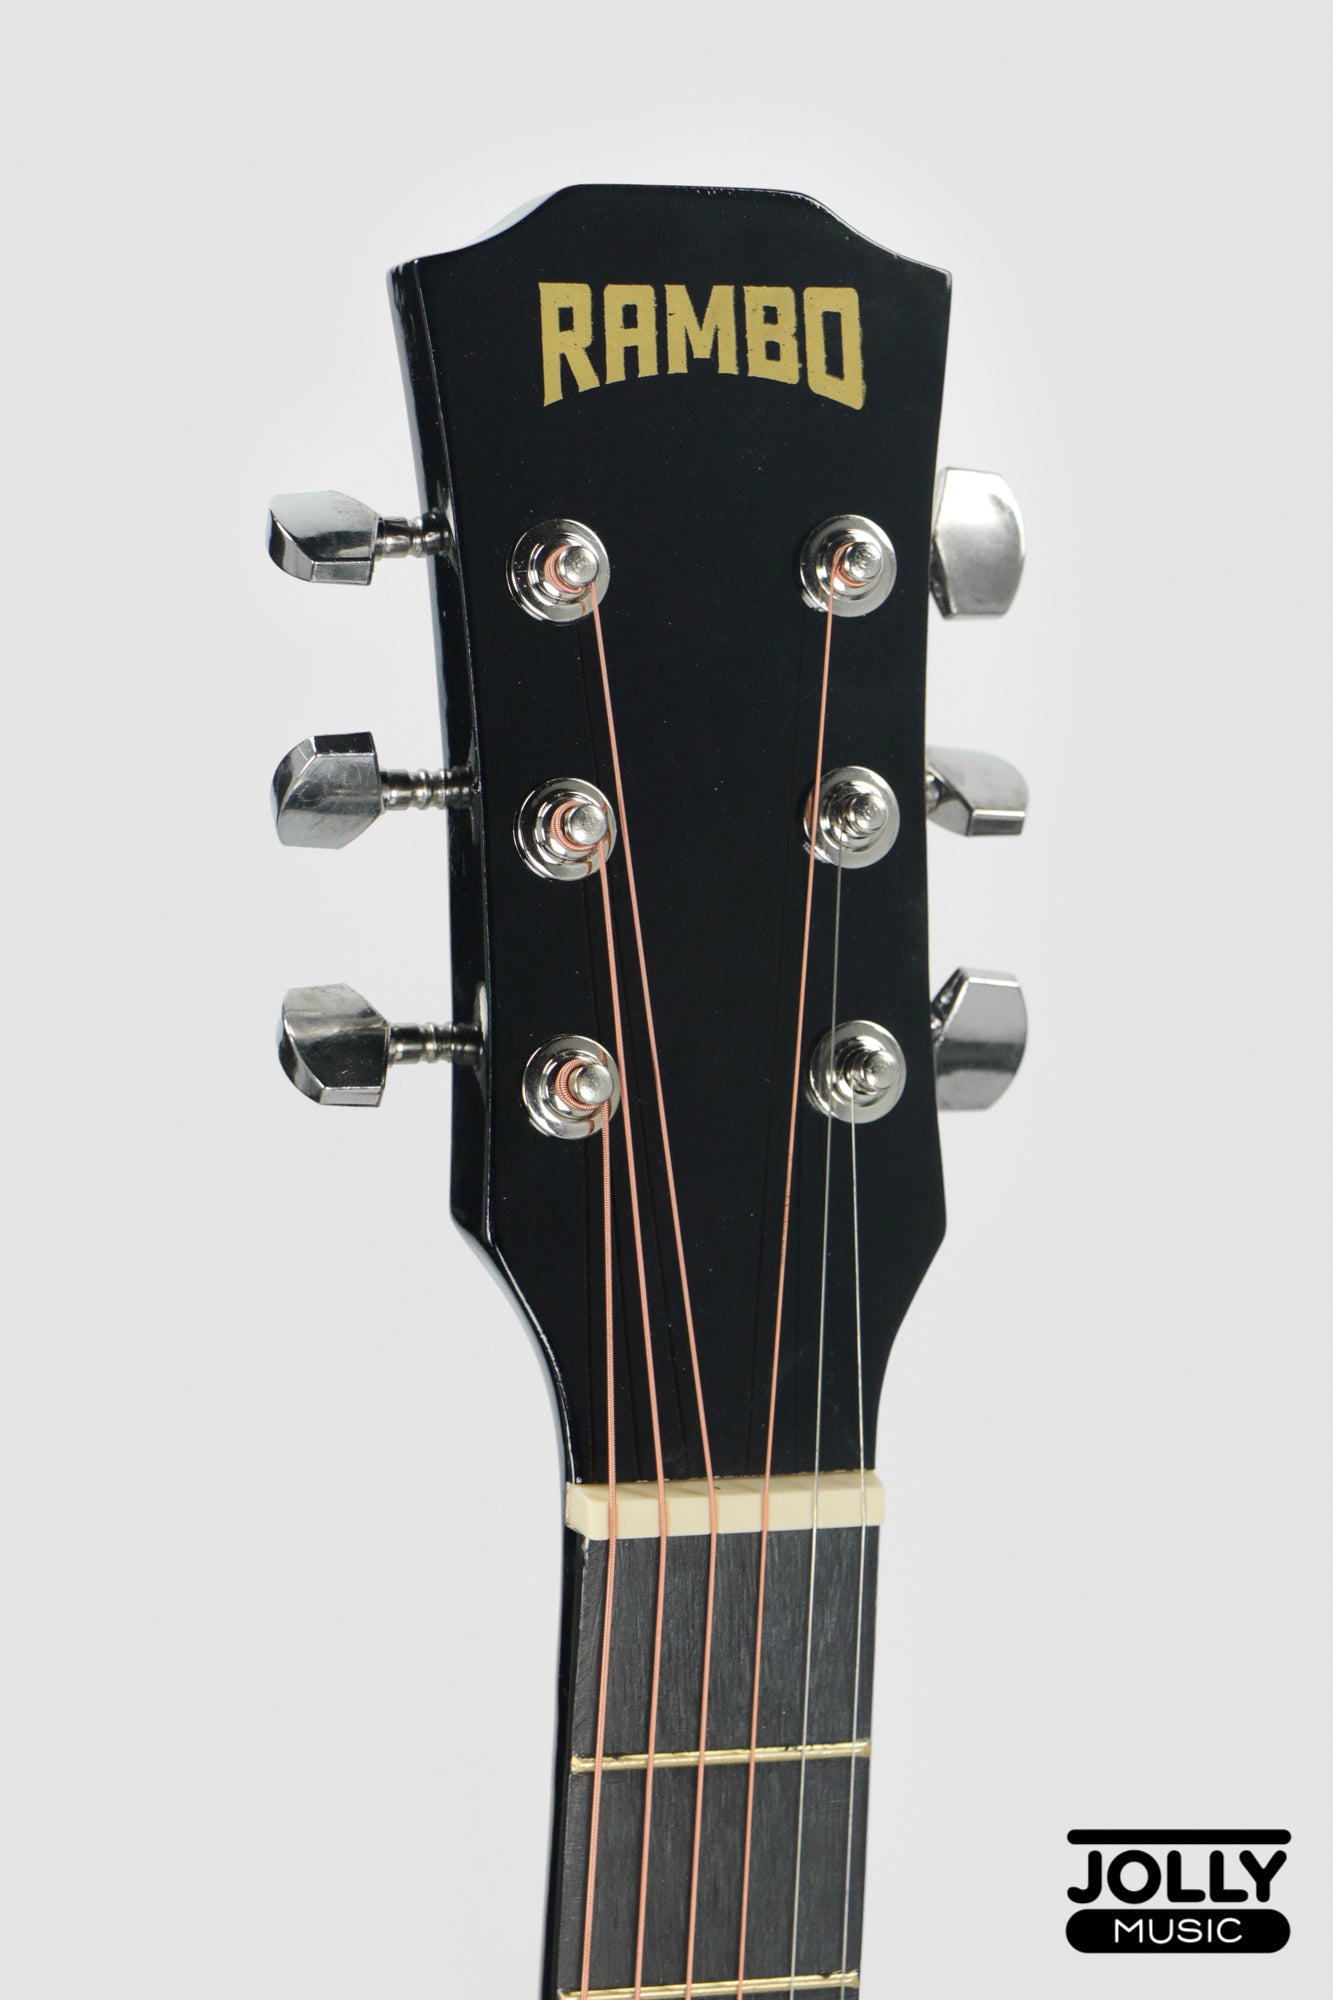 Rambo 38" Guitar K-38LT Truss Rod w/ Case, 3 Picks, Tuner, Capo - Black